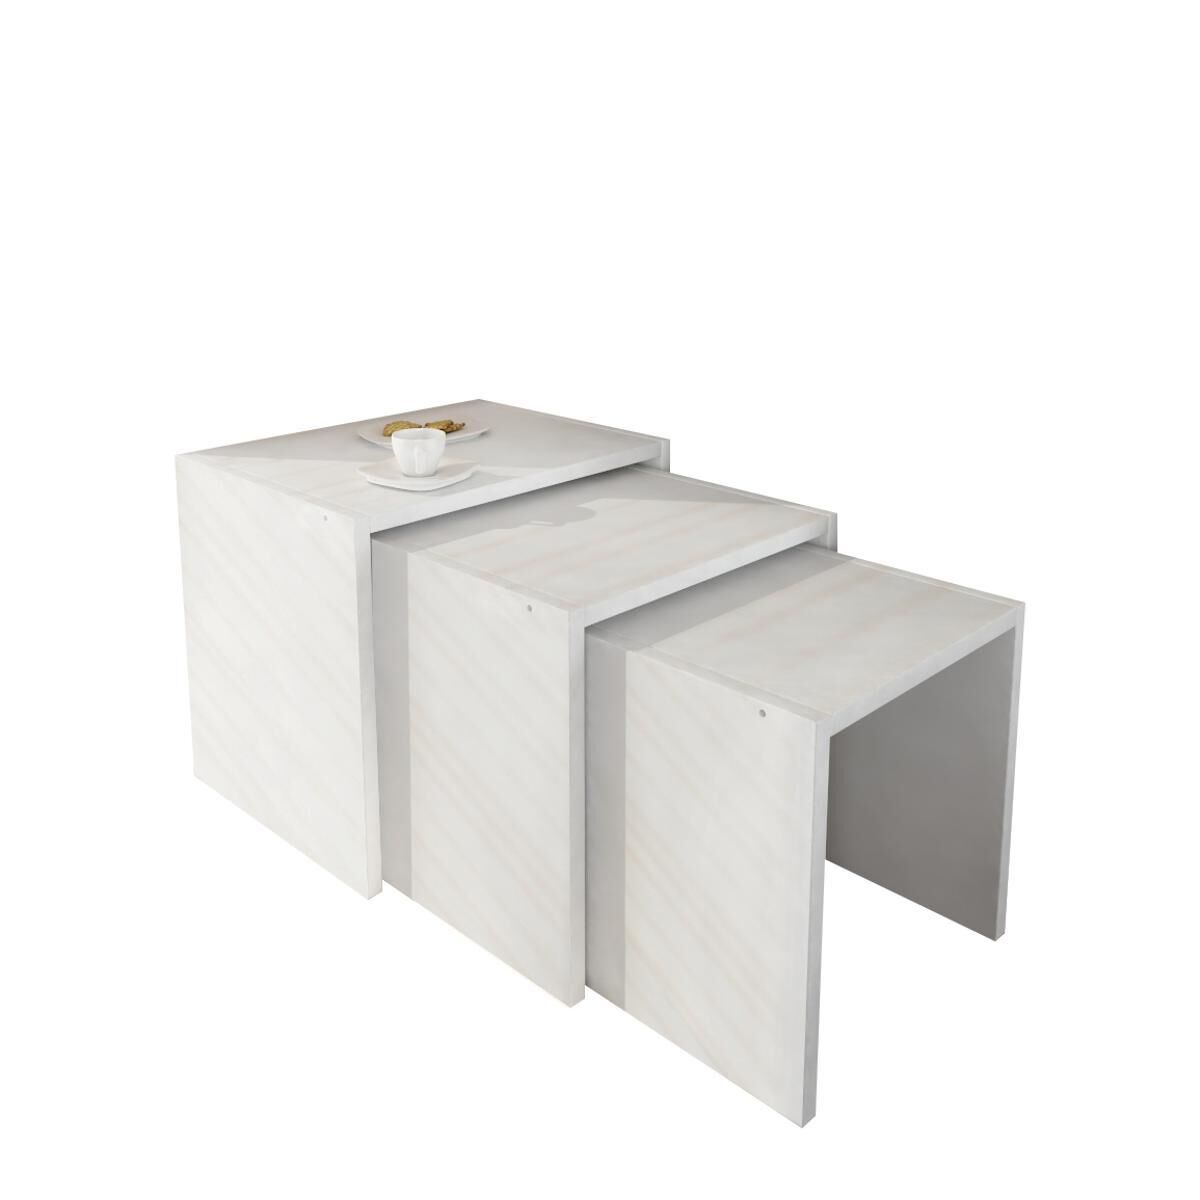 KISIRIA Coffee Table White Chipboard/Melamine 44.5x35x38.5cm 3pcs Set